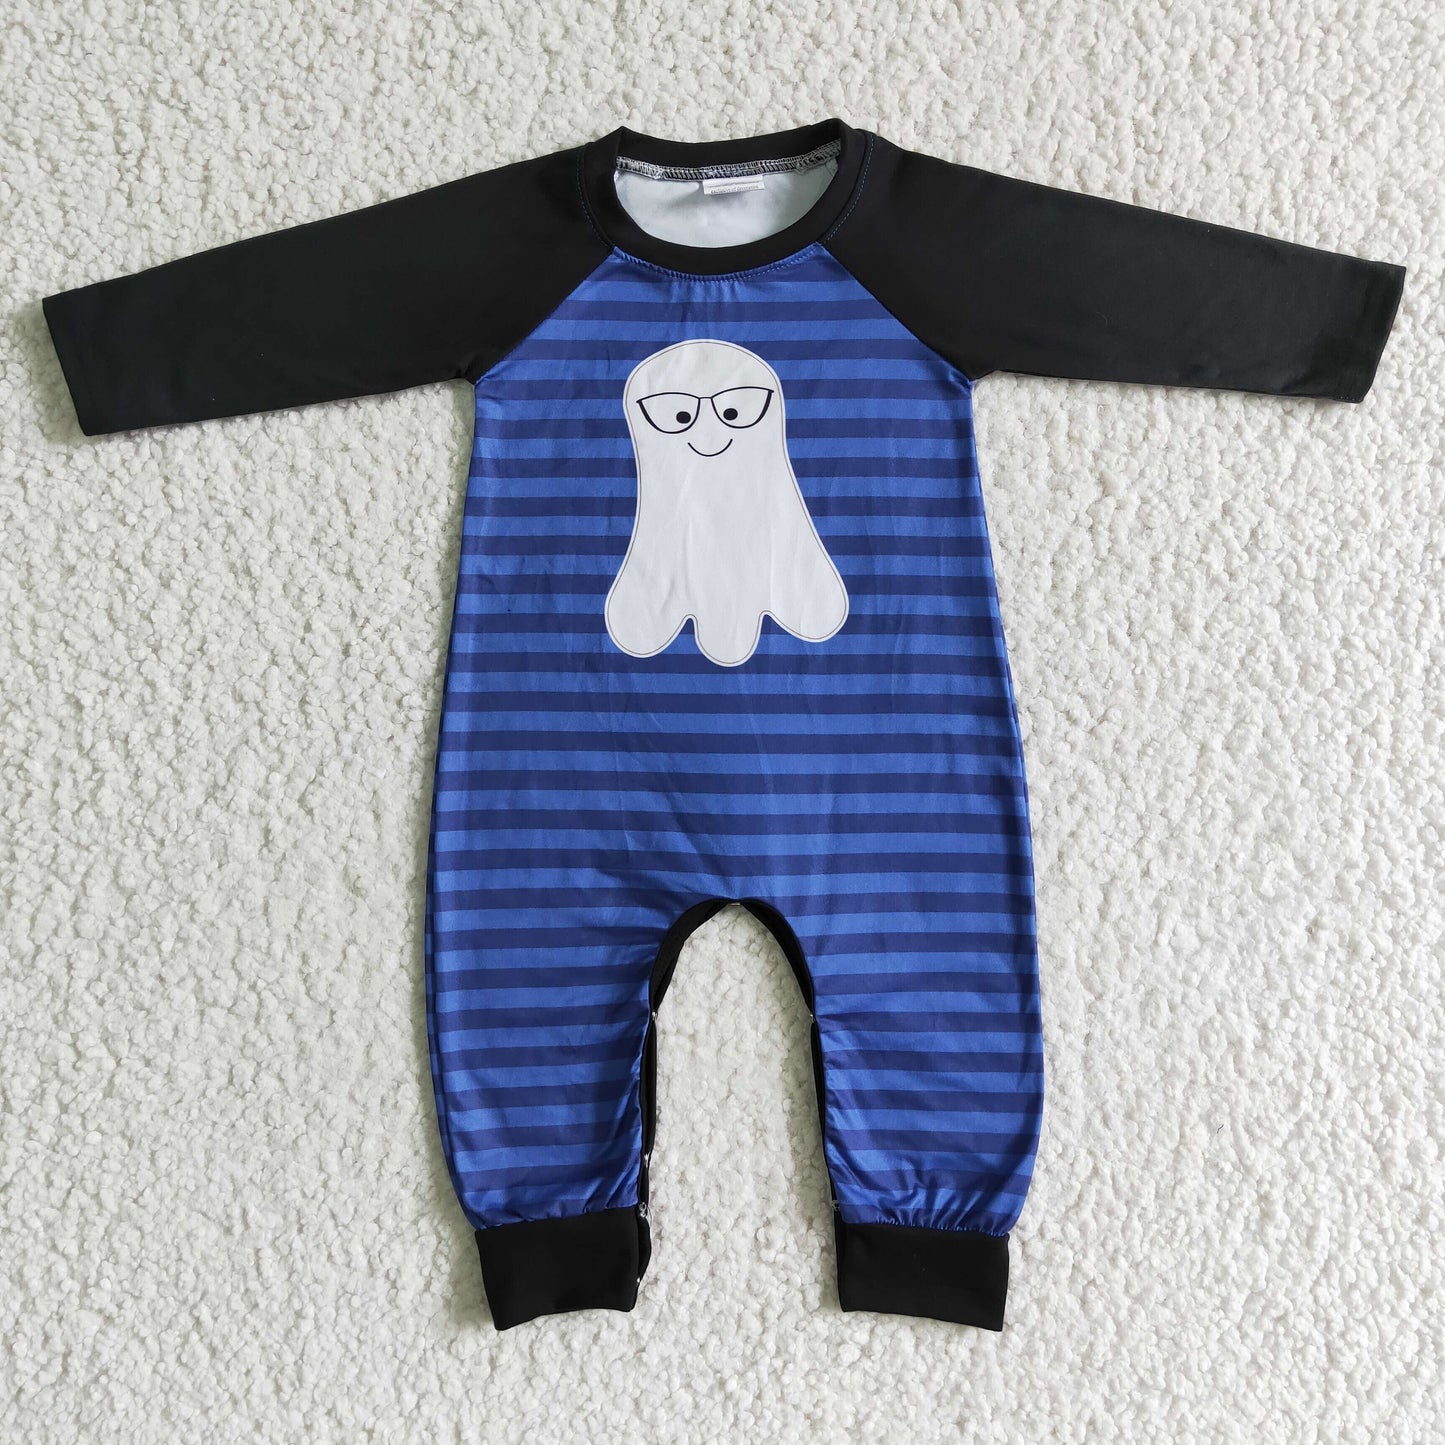 Ghost print blue stripe baby boy Halloween romper